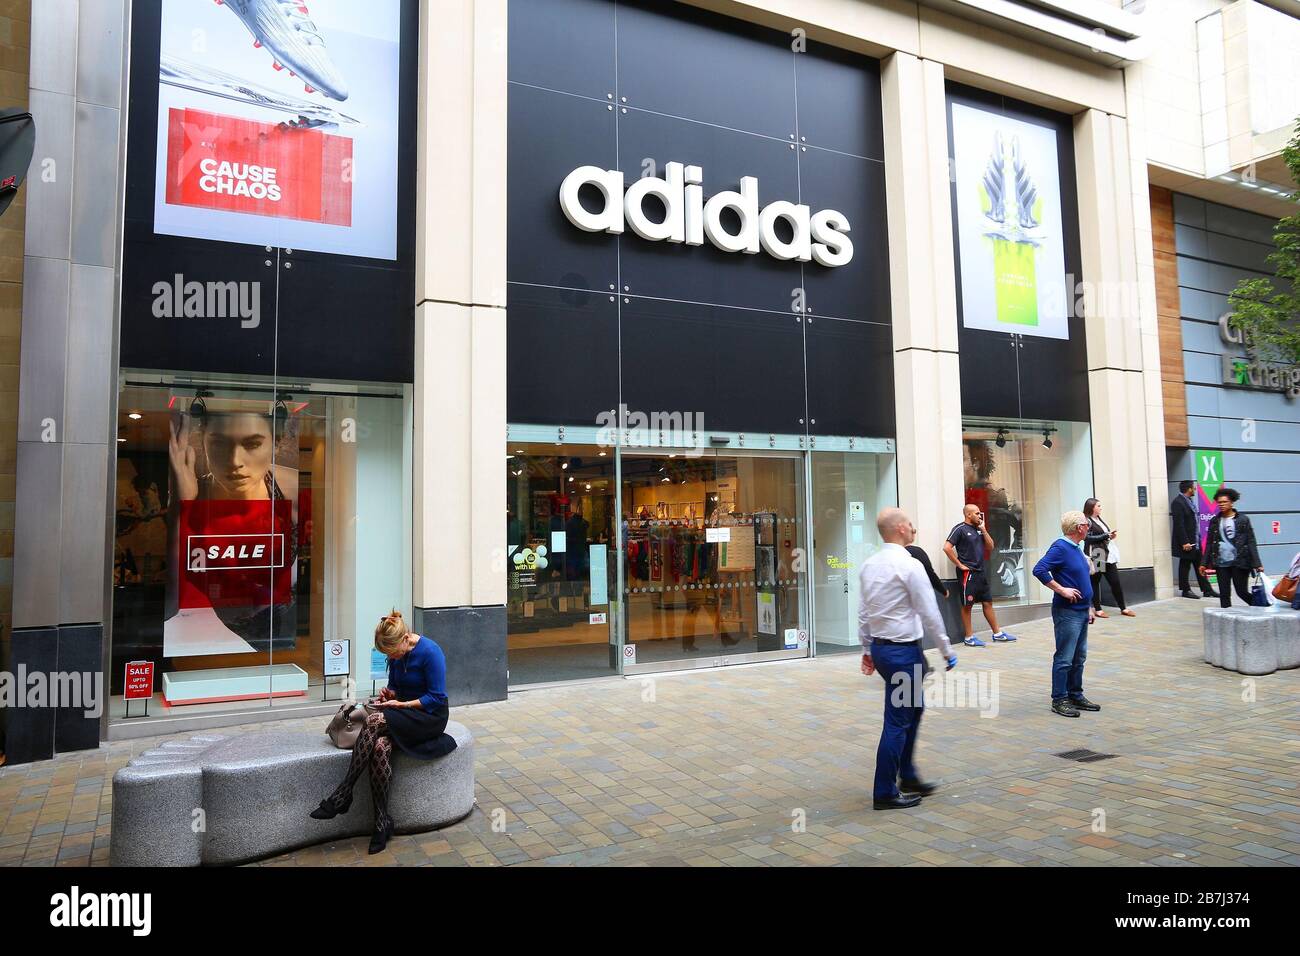 adidas shop uk sale